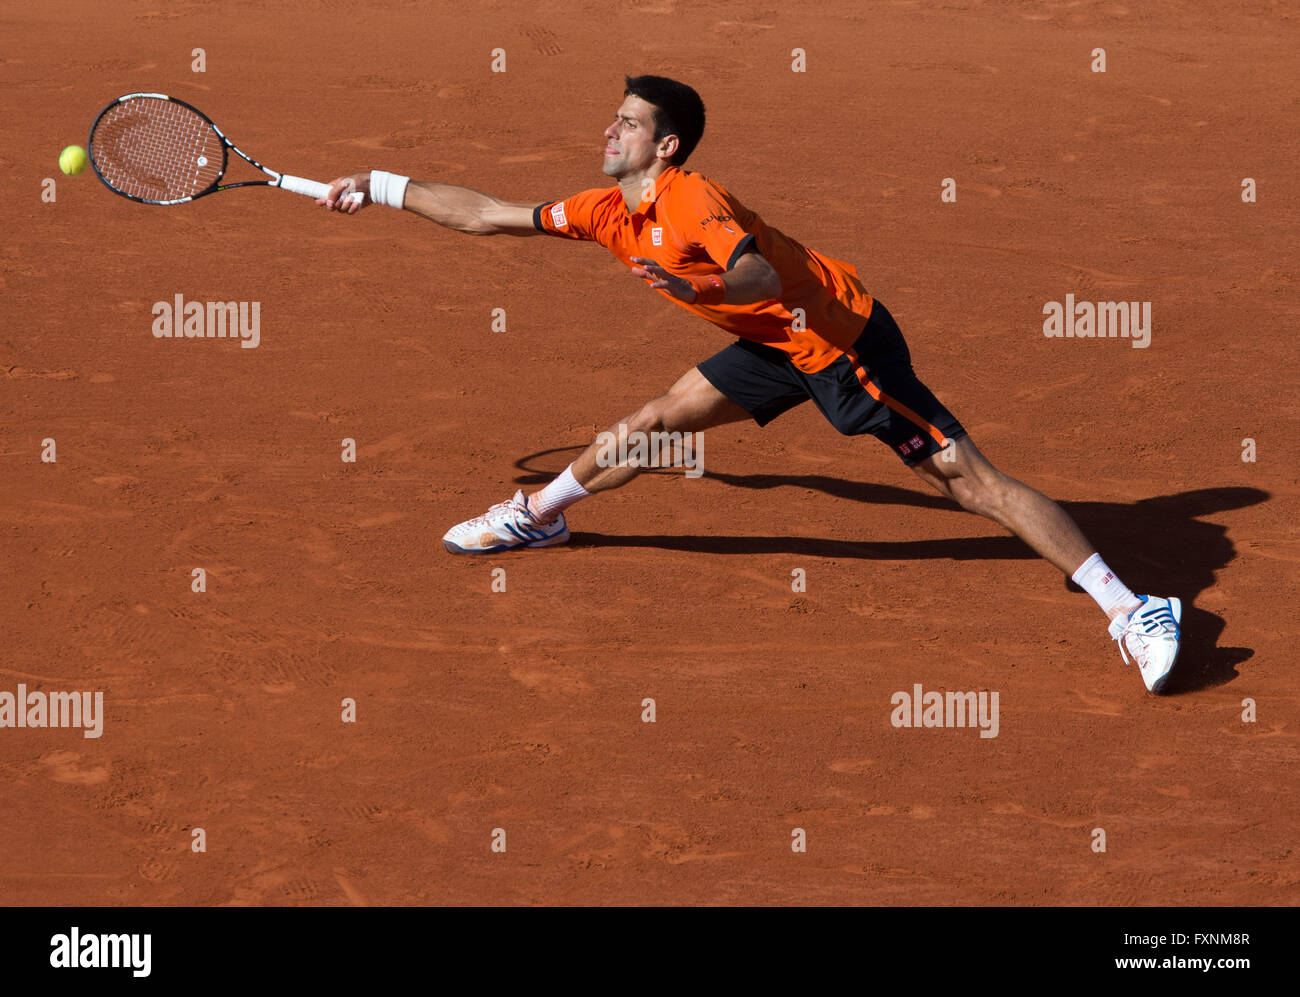 Novak Djokovic (SRB), Open de France 2015, Grand Chelem Tennis Turnier à Roland Garros, Paris, France Banque D'Images